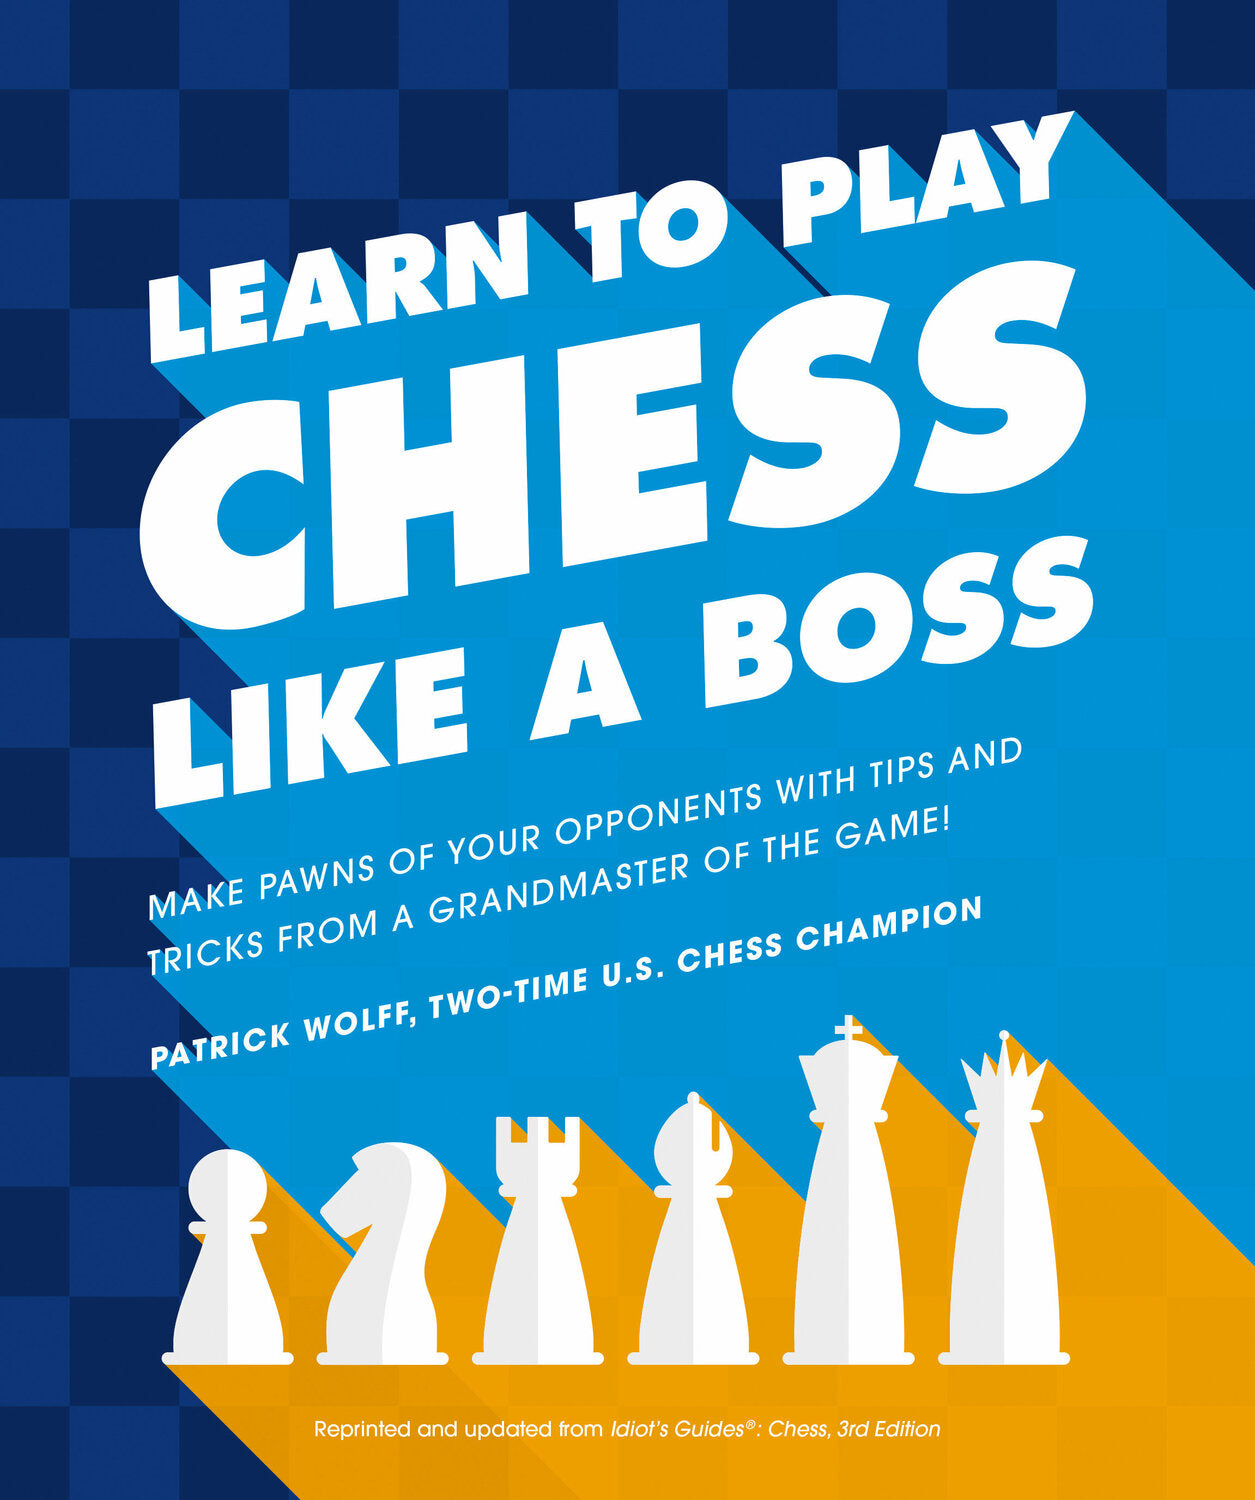 Play Chess Like a Boss